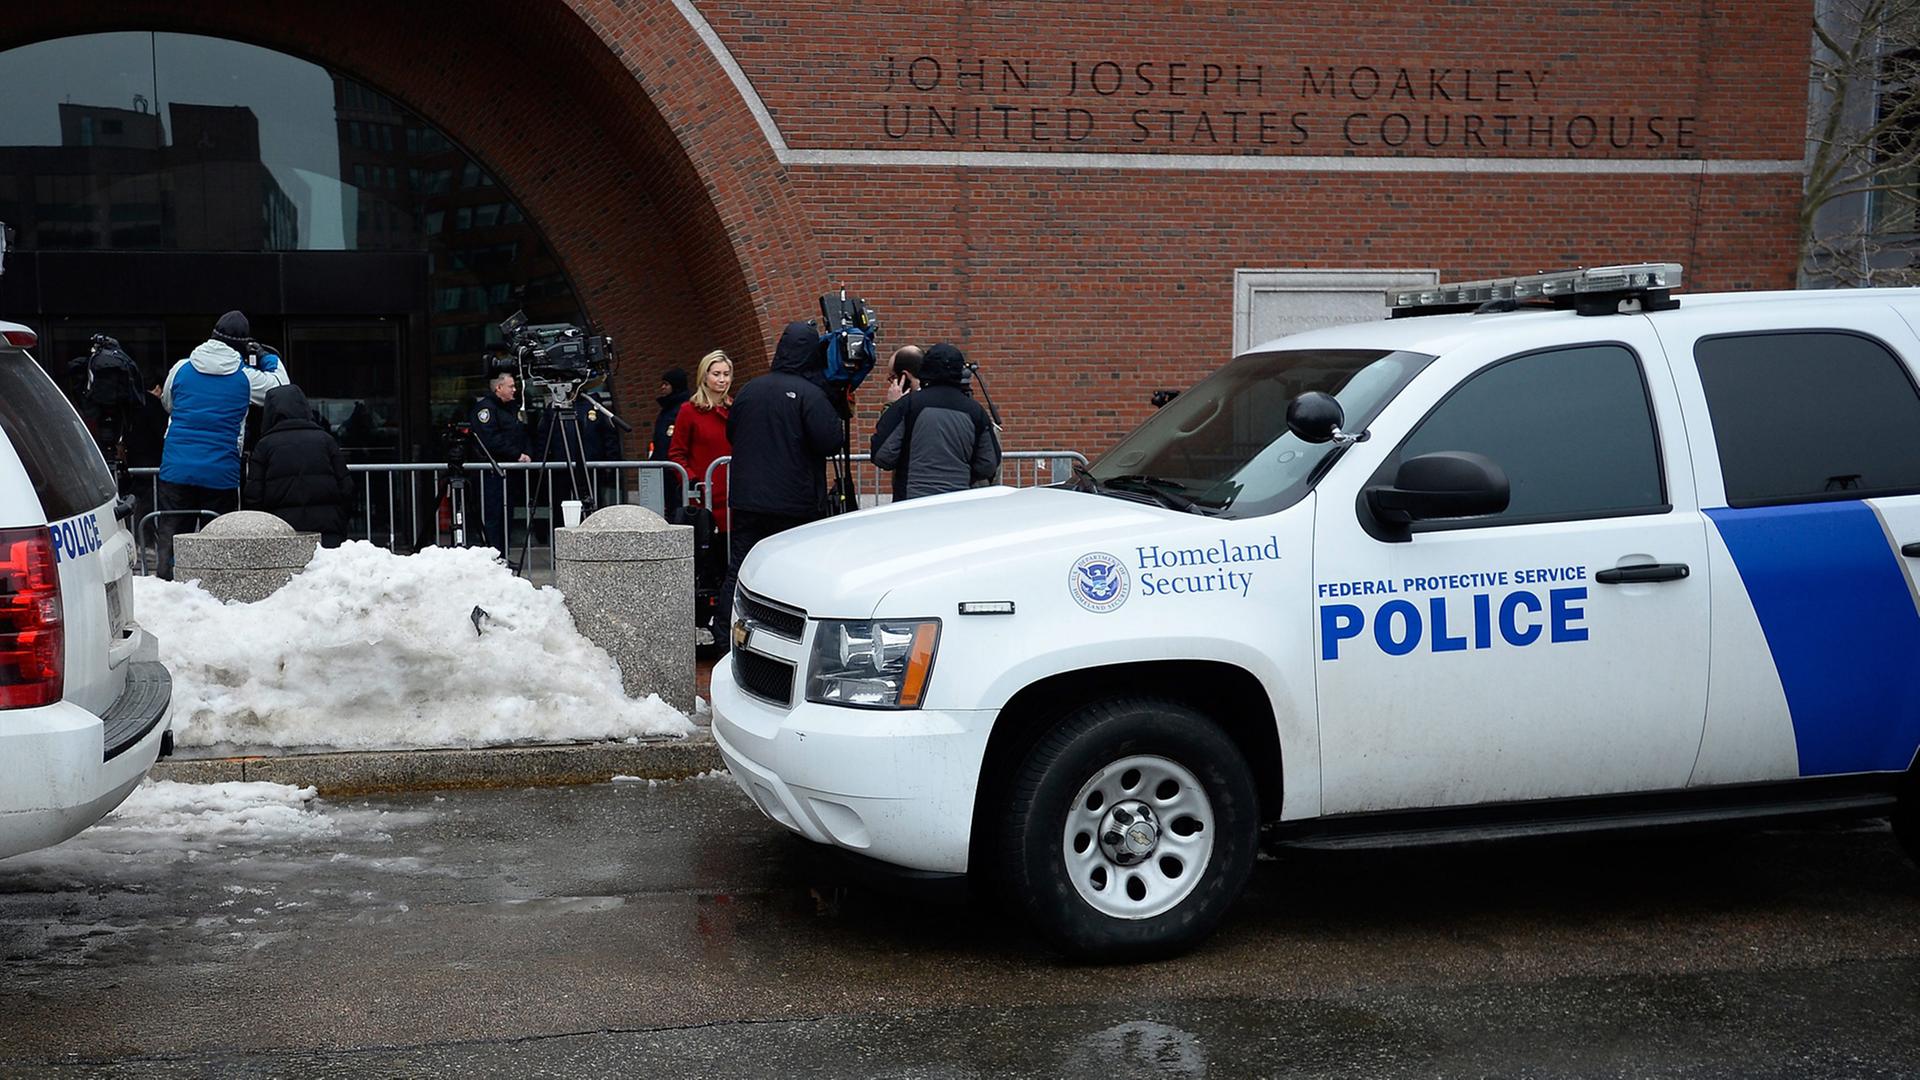 ttenDer Prozess gegen den mutmaßlichen Attentäter hat begonnen. Die Verhandlung findet im John Joseph Moakley Federal Courthouse statt.